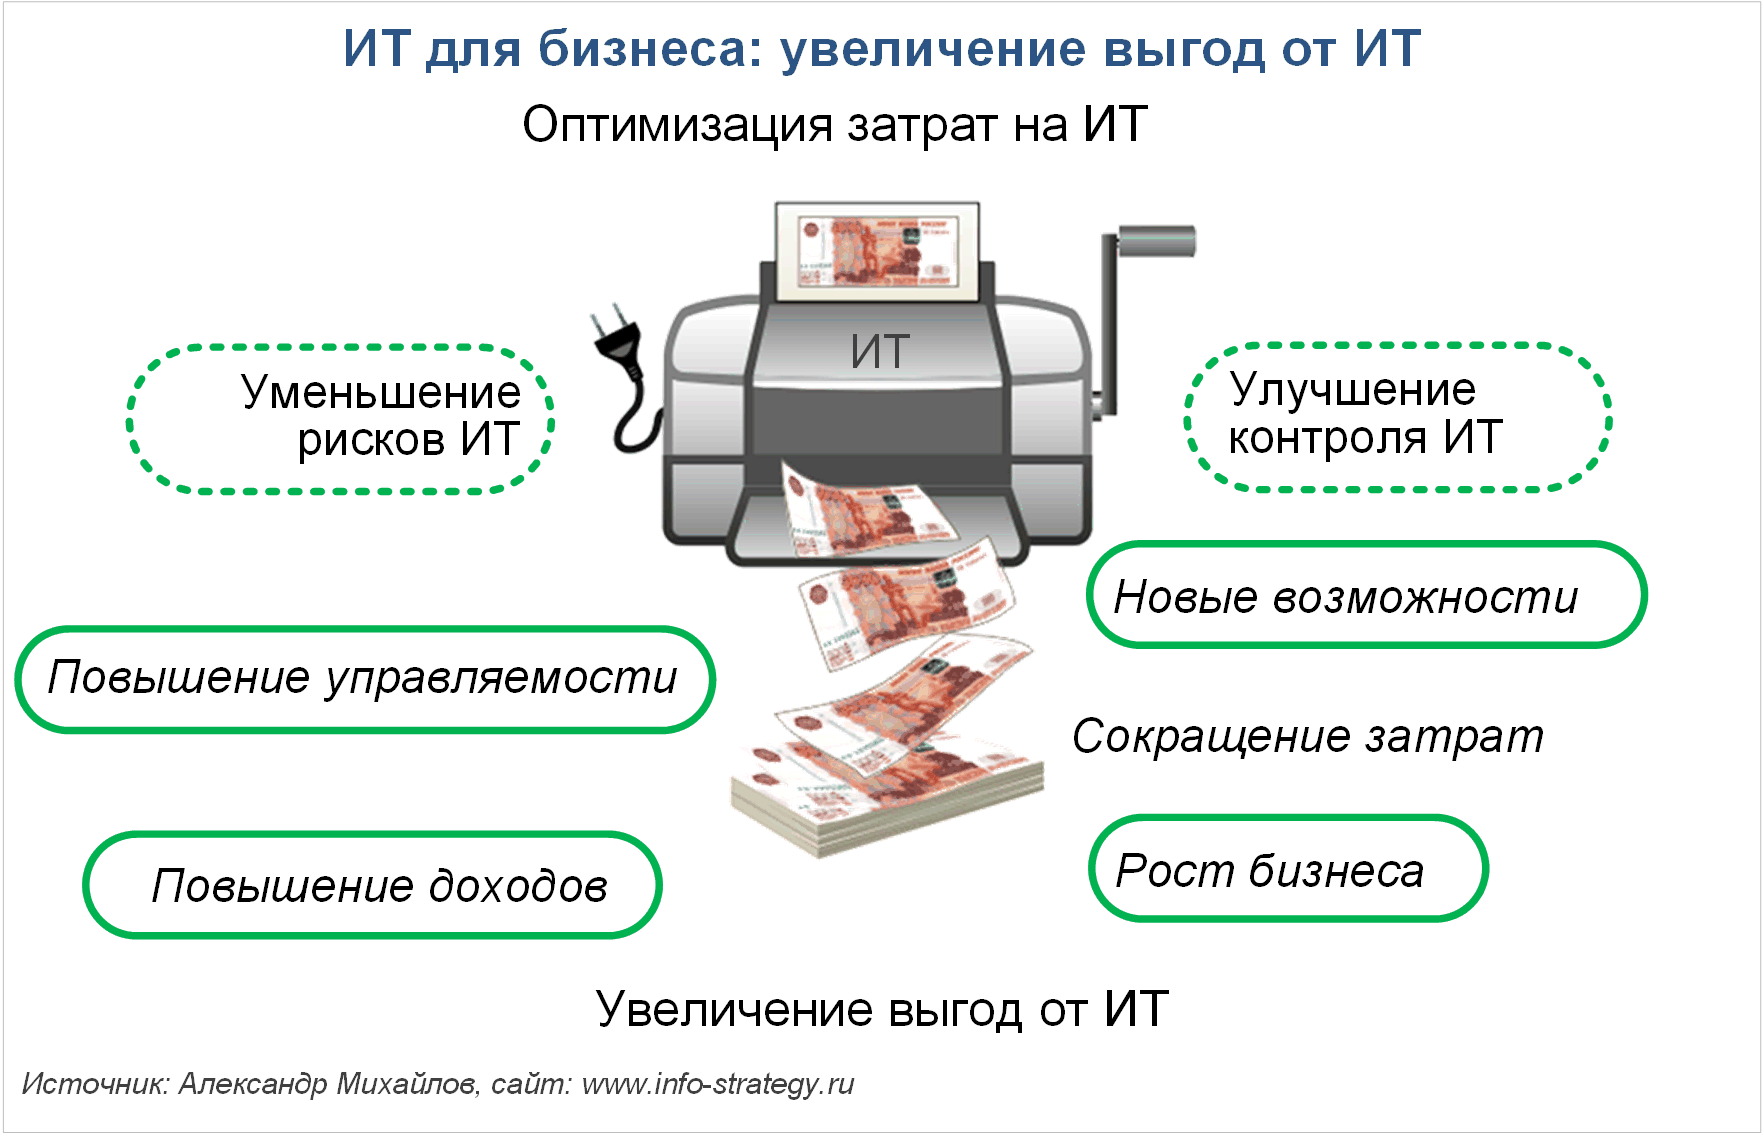 ИТ для бизнеса: увеличение выгод от ИТ Источник: Александр Михайлов, сайт www.info-strategy.ru